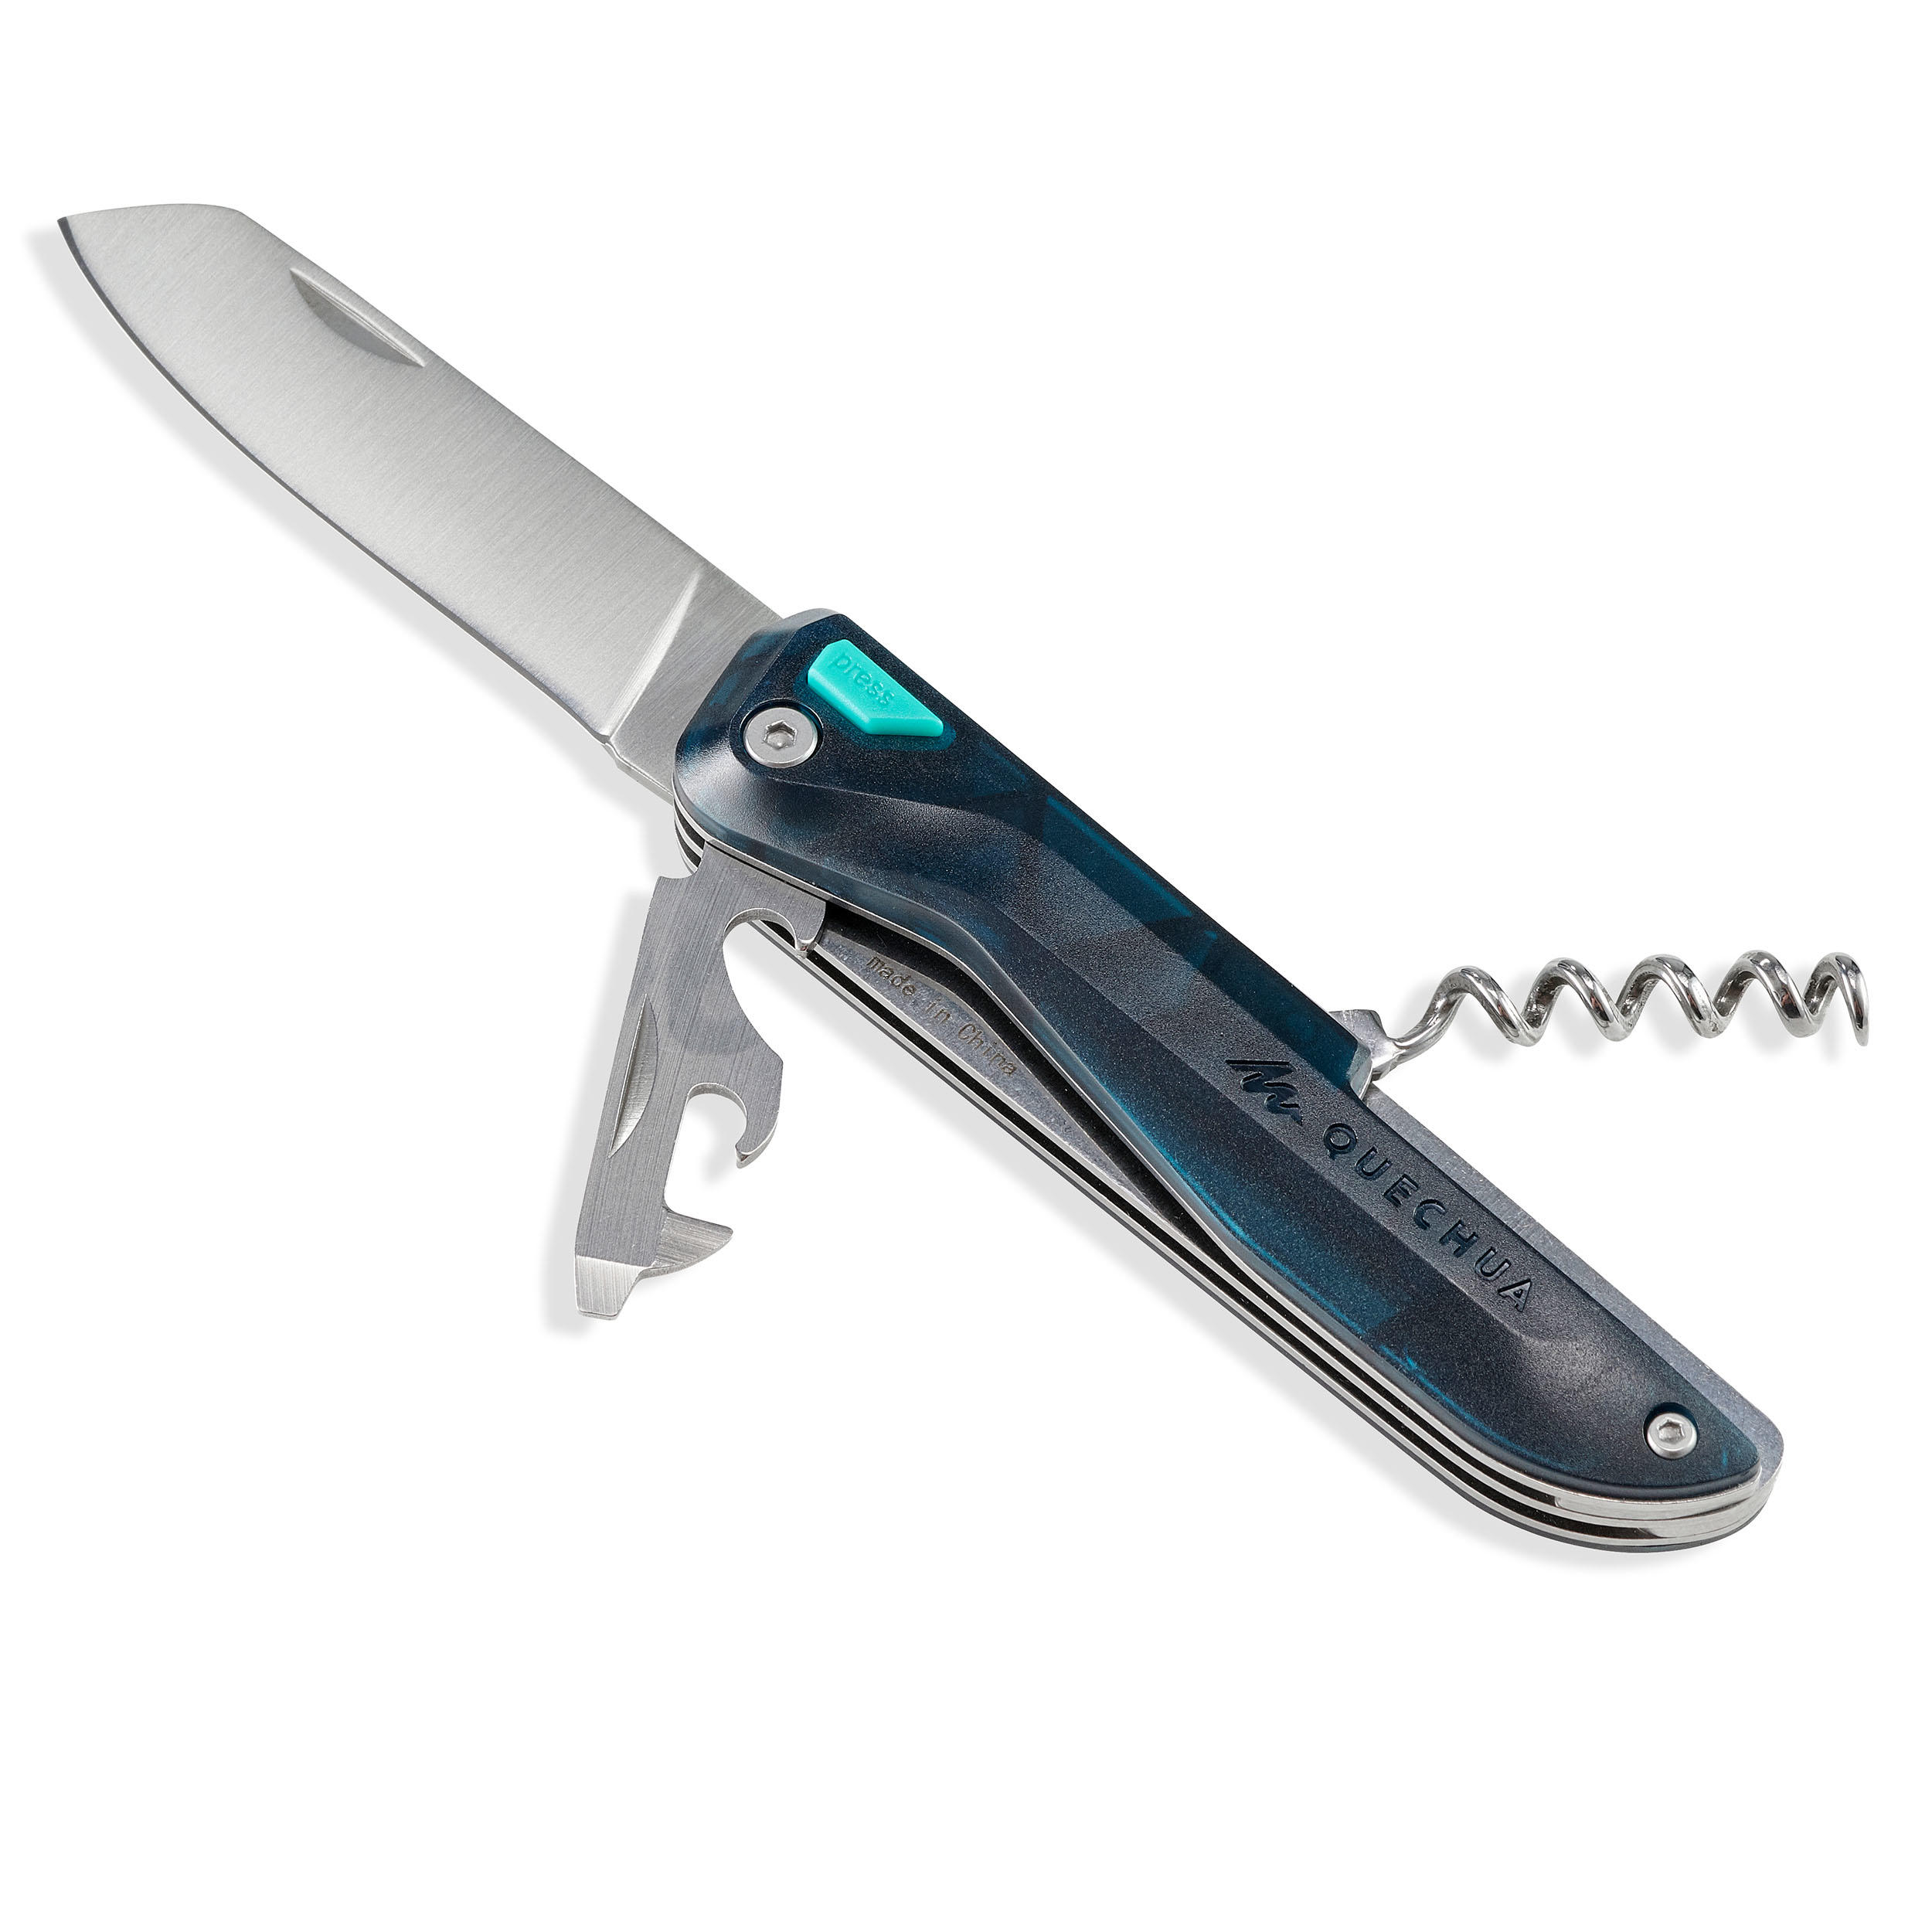 MH500 Multi-tool Hiking Knife with Locking Blade